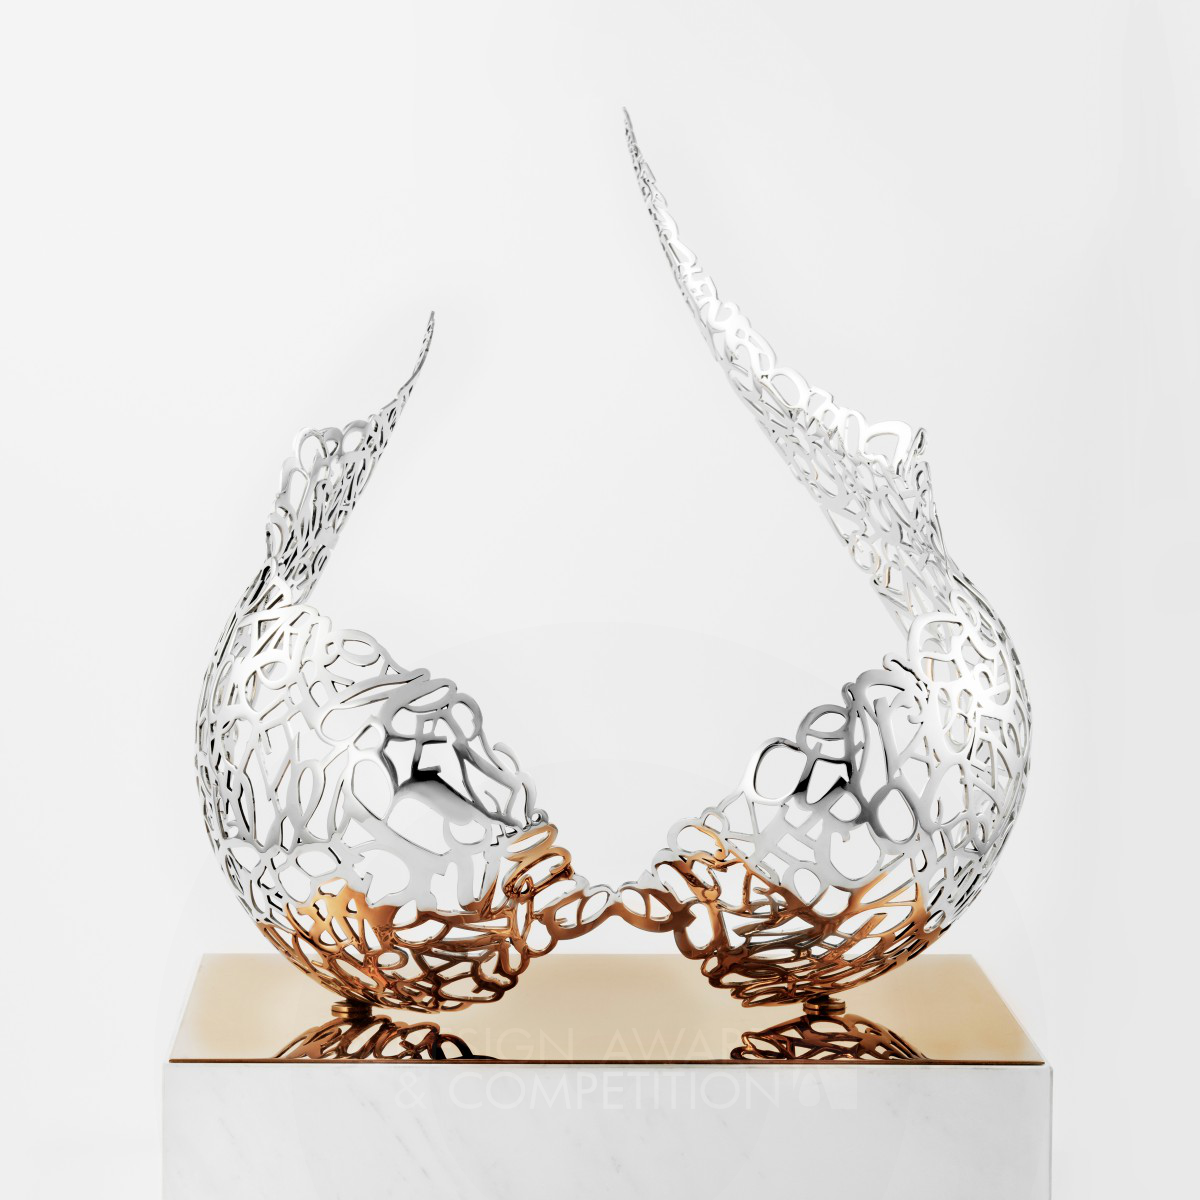 The Wings <b>Sculpture Art